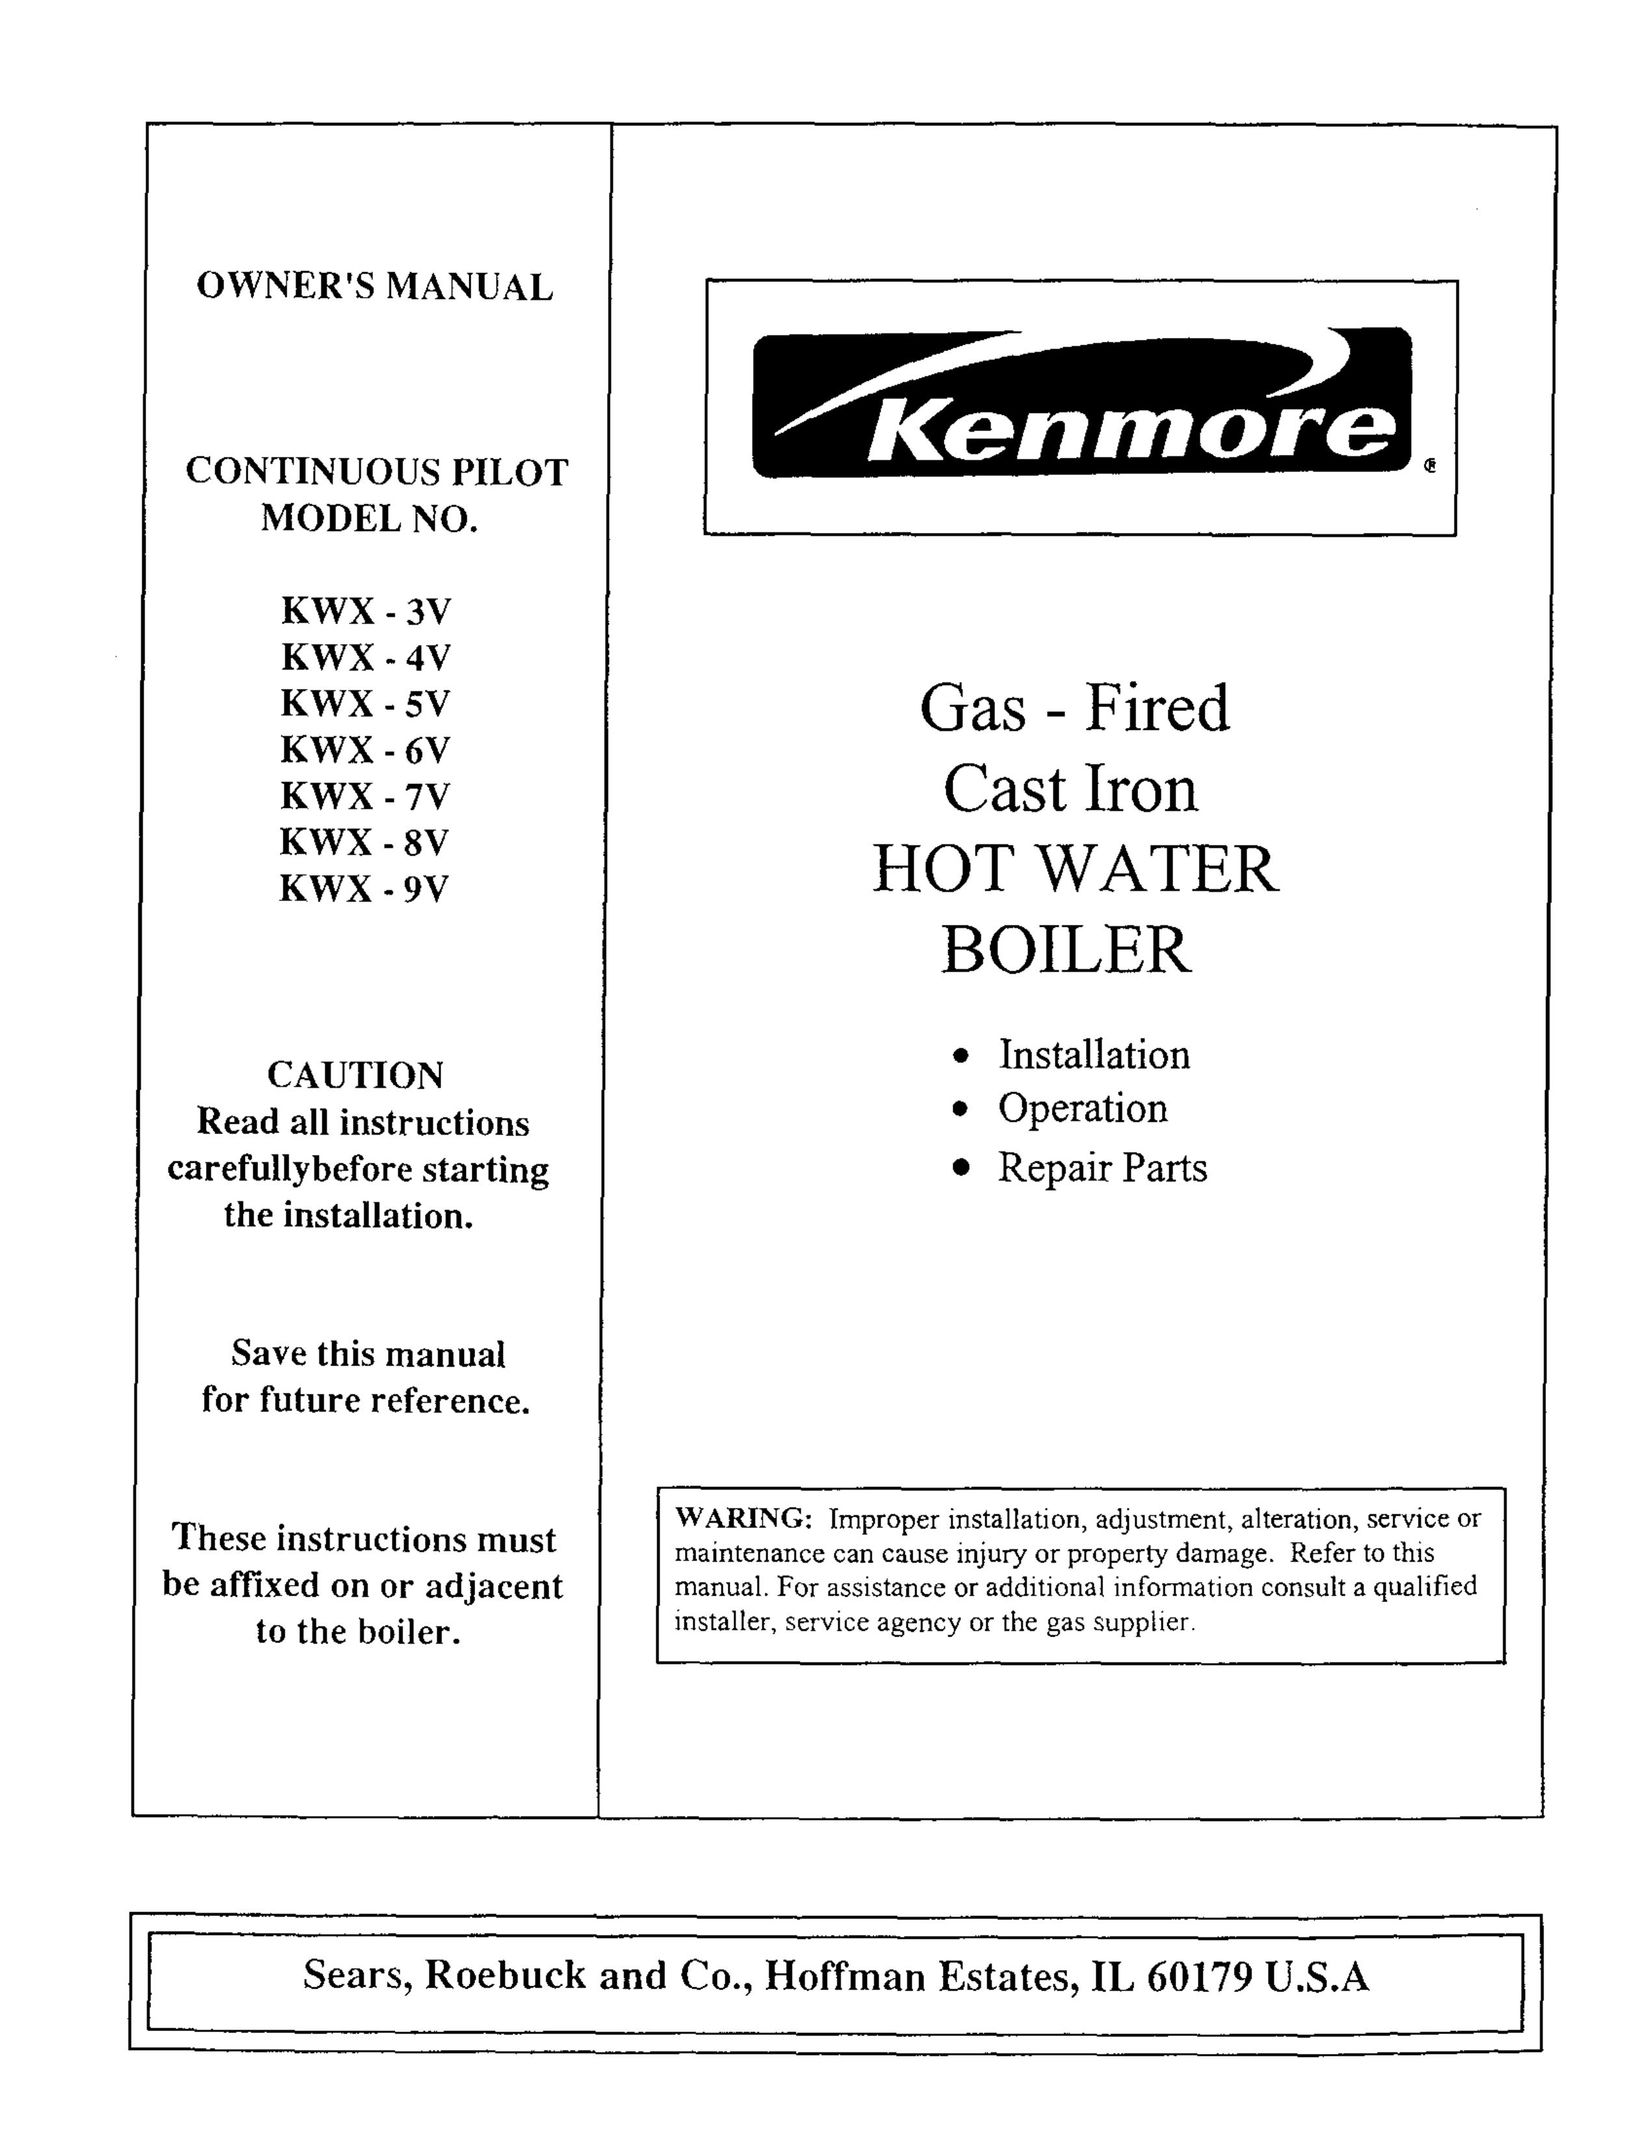 Kenmore KWX - 5V Boiler User Manual